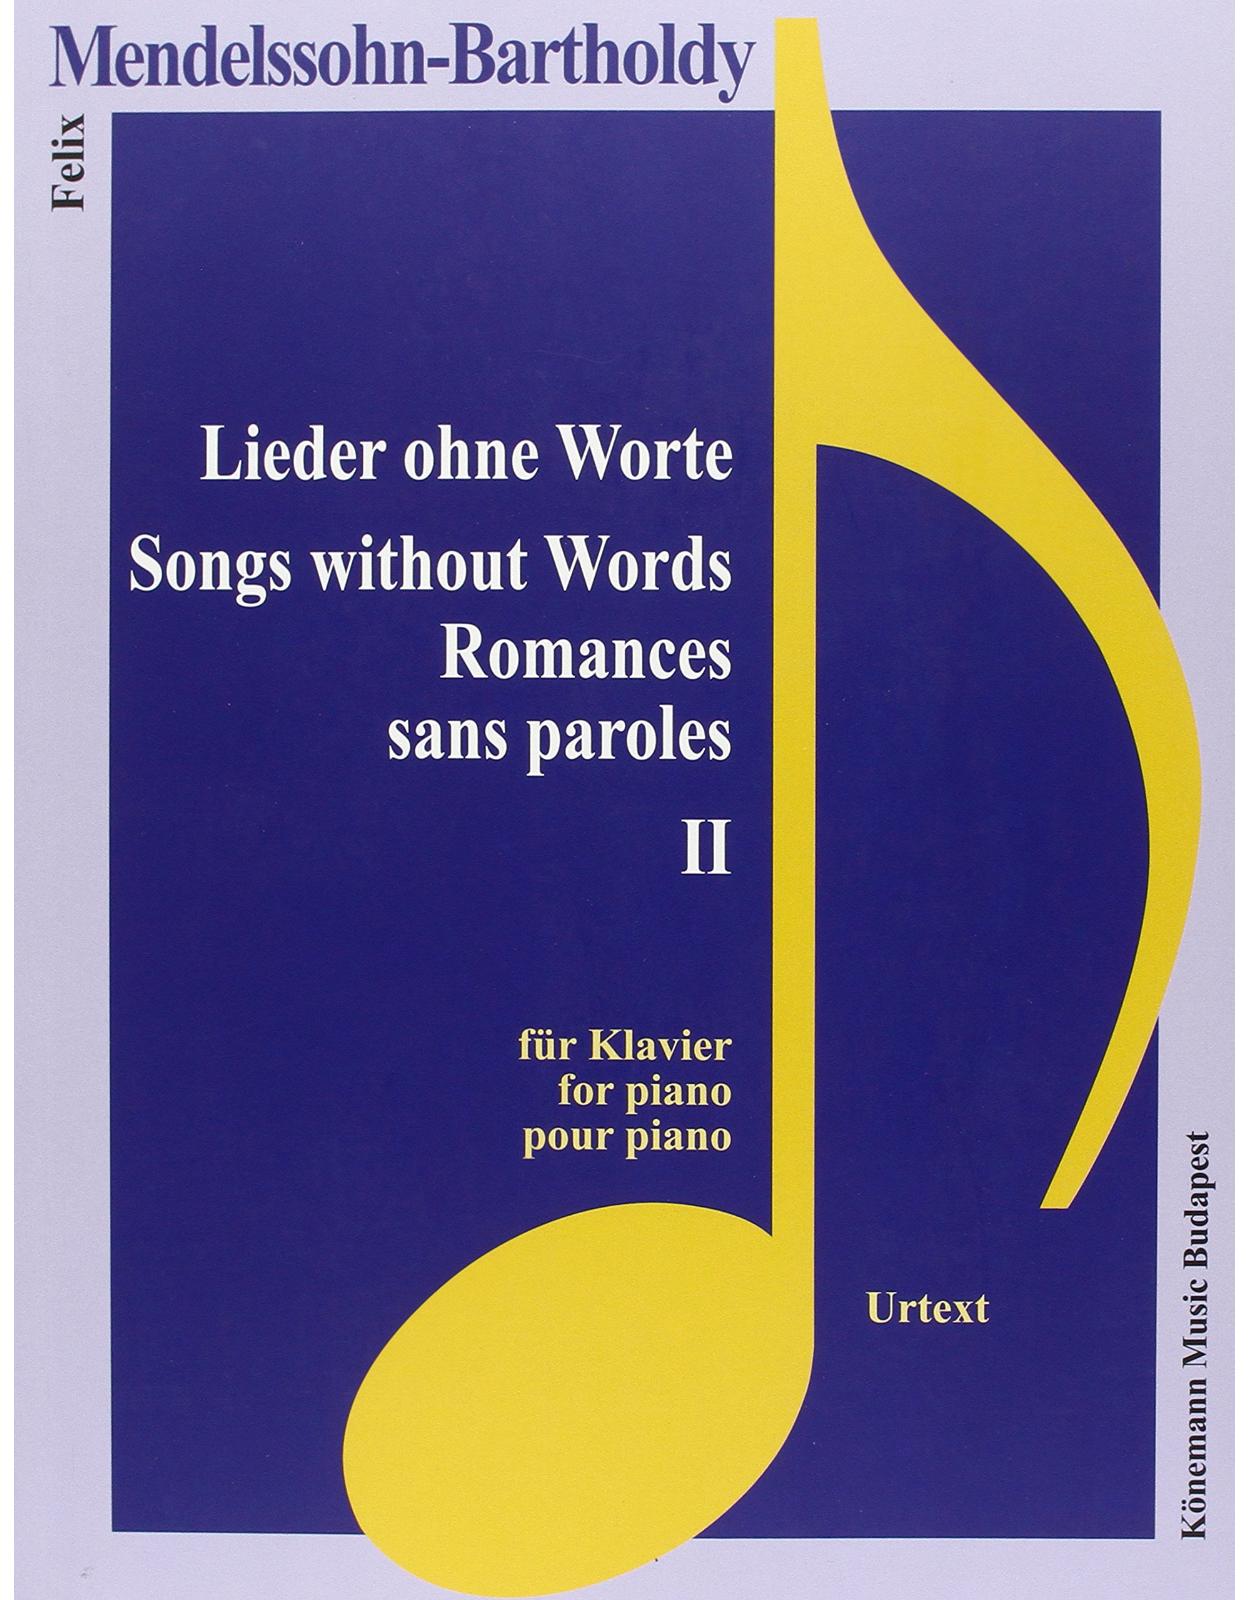 Mendelssohn-Bartholdy, Lieder ohne Worte II